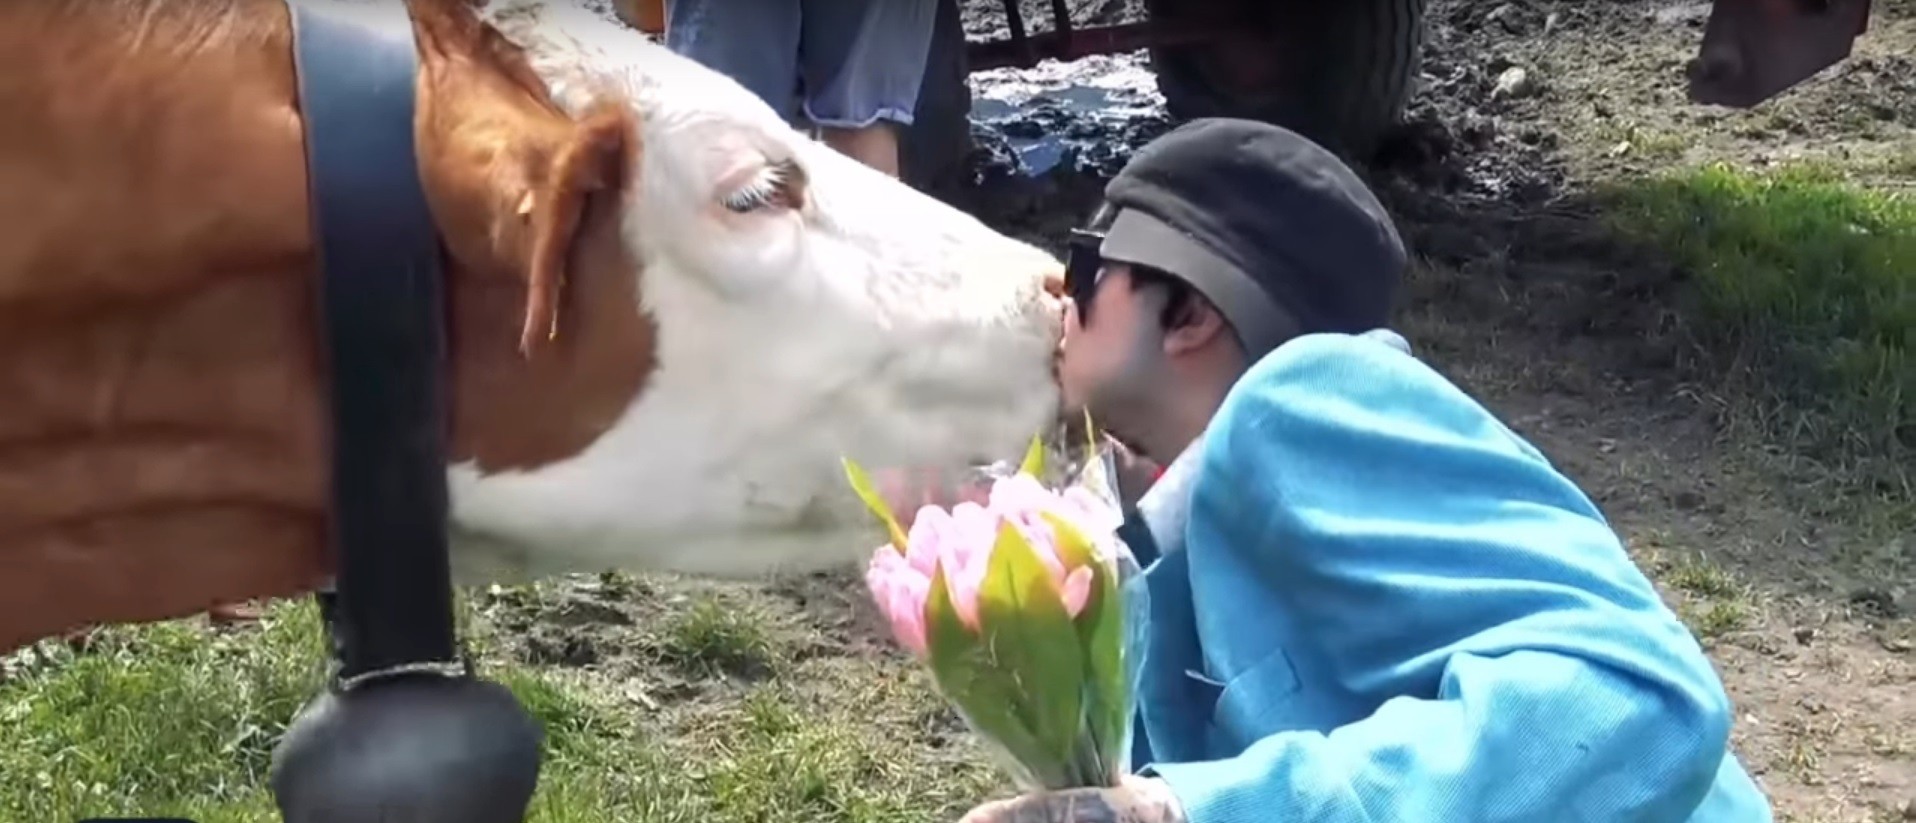 Dangerous nuisance': Austria warns against online cow kissing challenge